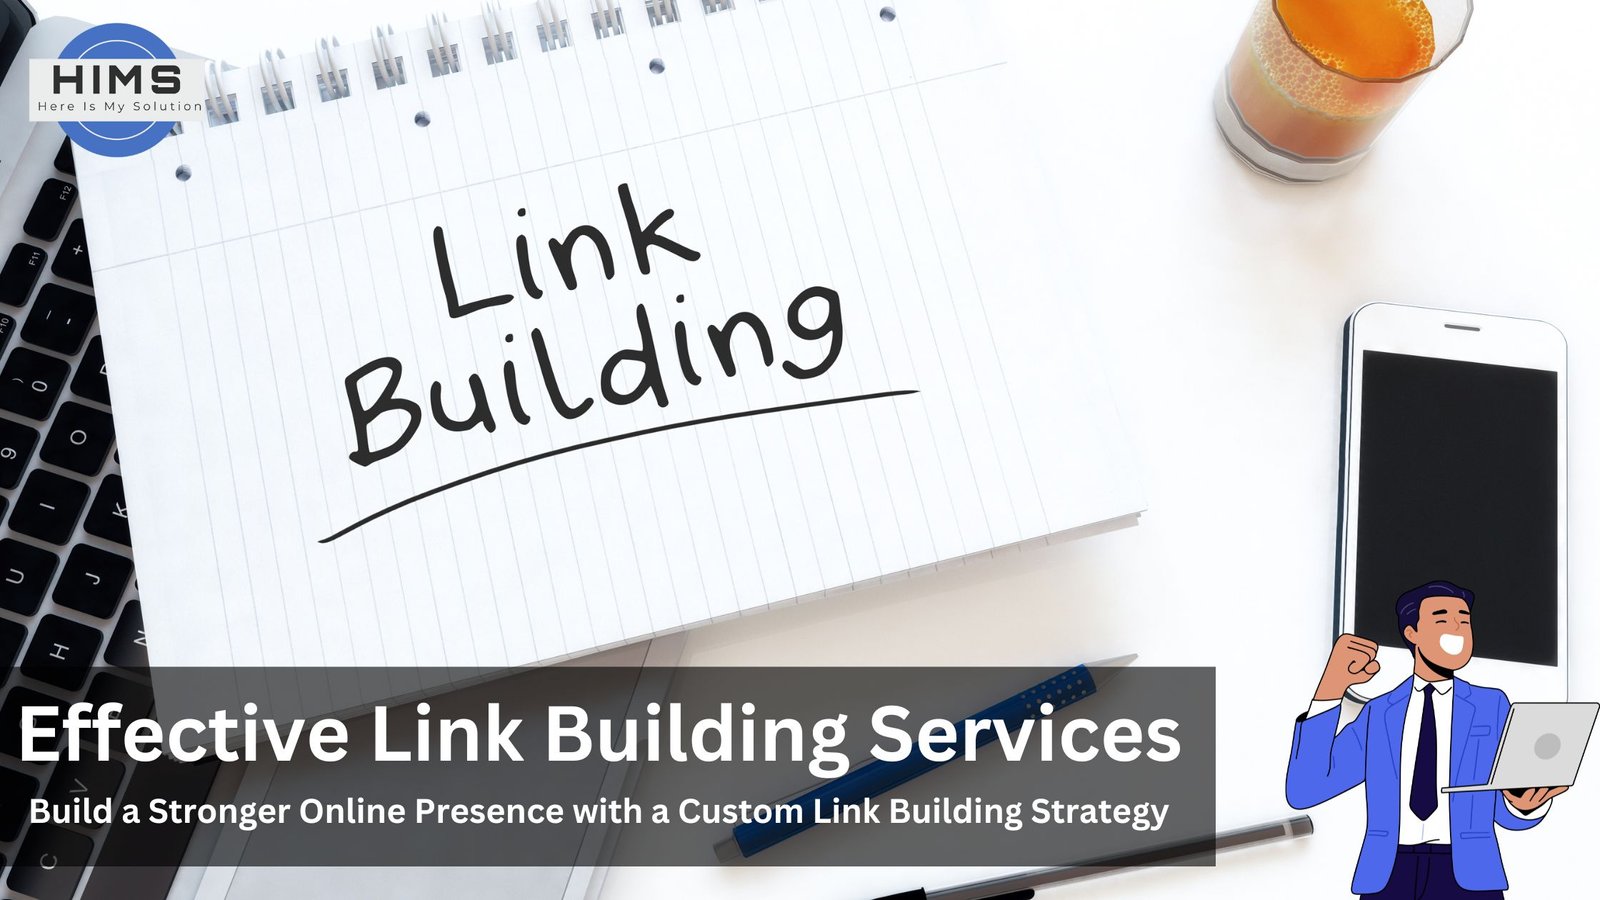 Link Building Services - HIMS